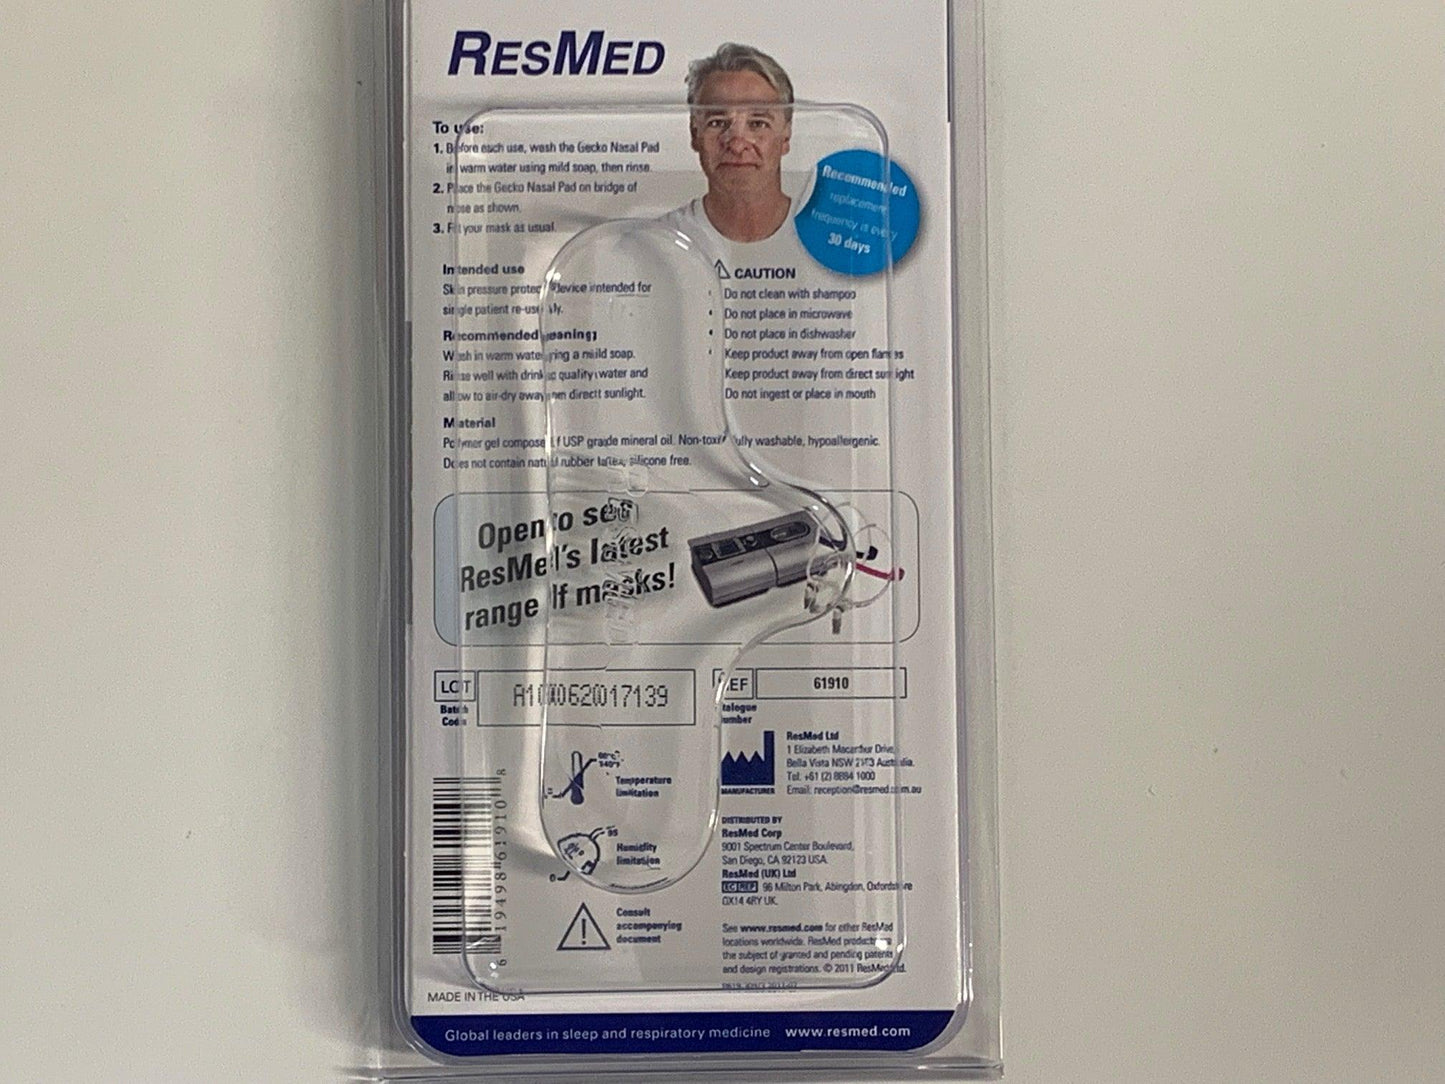 NEW Lot of 2 ResMed Gecko Large Gel Nasal Pad for CPAP Mask 61910 - MBR Medicals